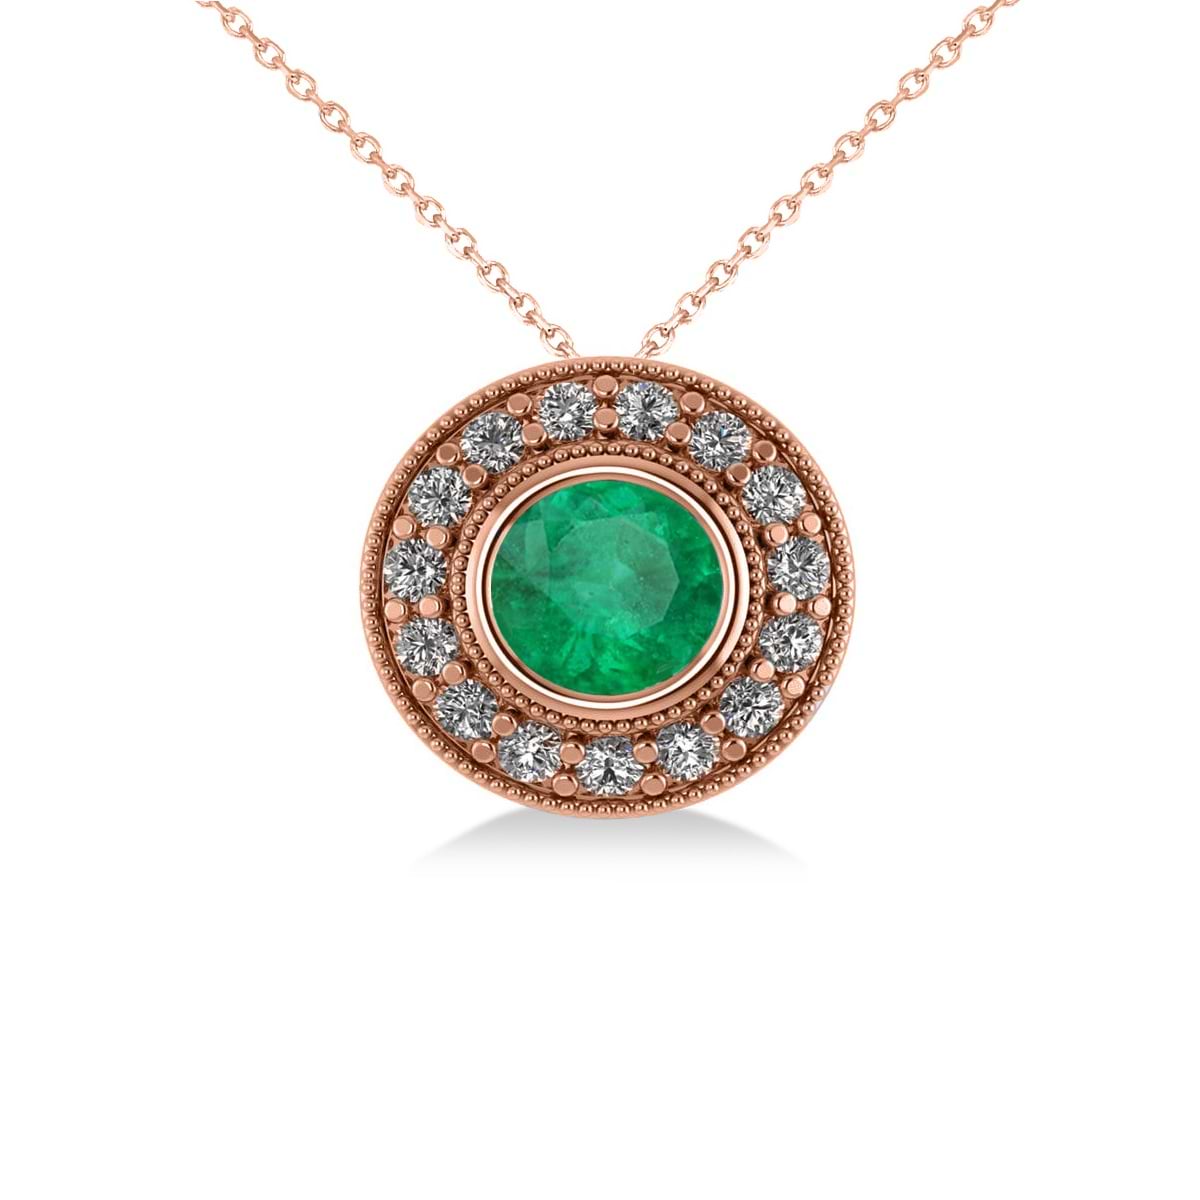 Round Emerald & Diamond Halo Pendant Necklace 14k Rose Gold (1.71ct)